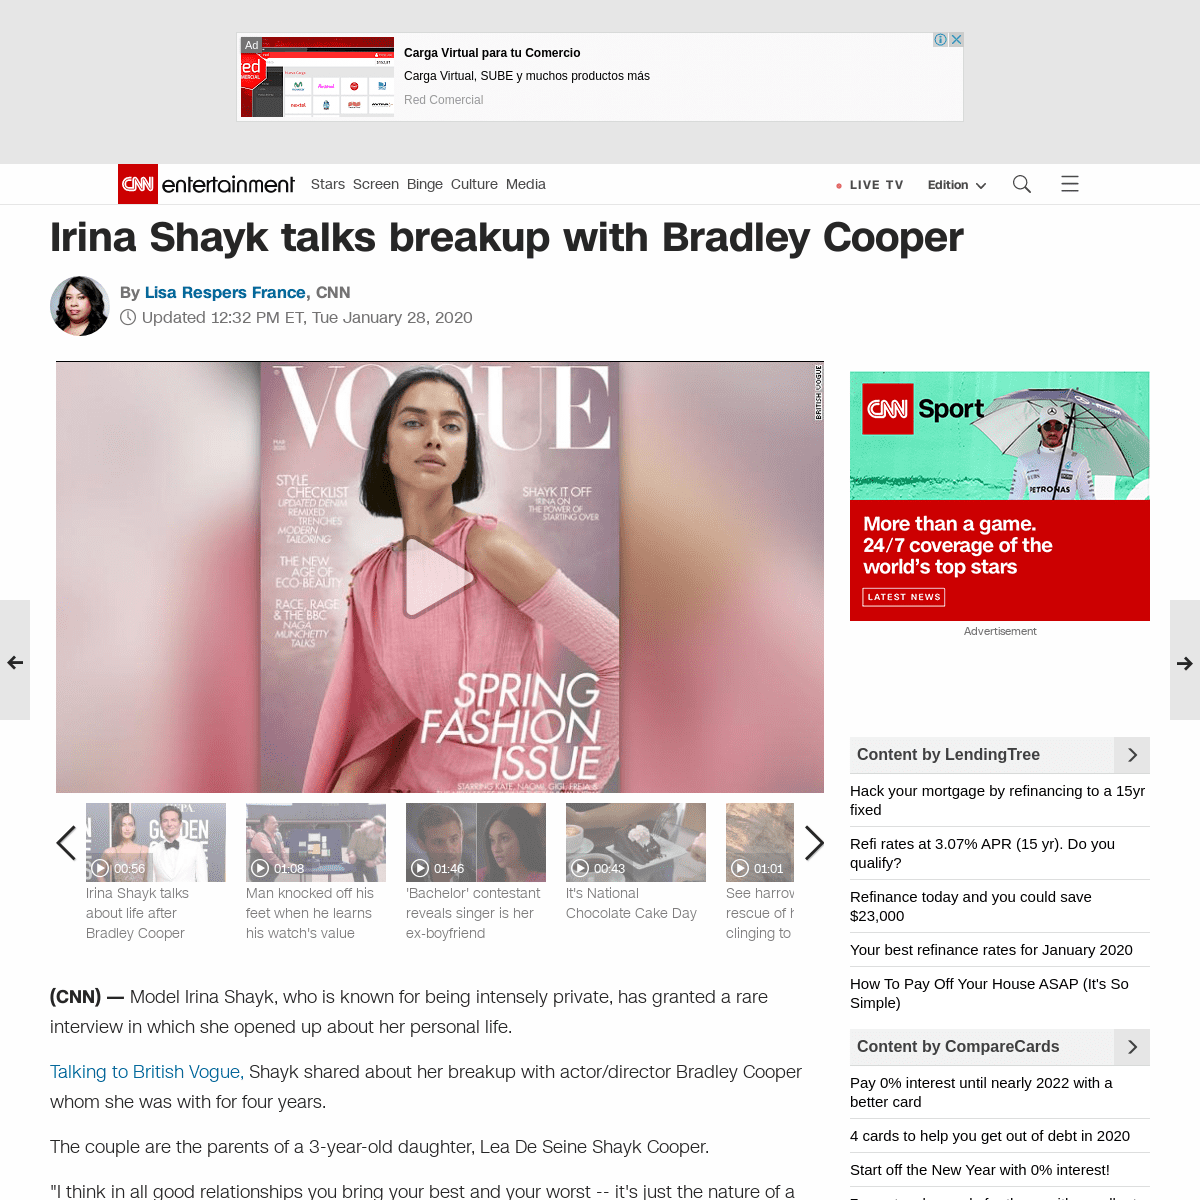 A complete backup of www.cnn.com/2020/01/28/entertainment/irina-shayk-bradley-cooper-interview/index.html